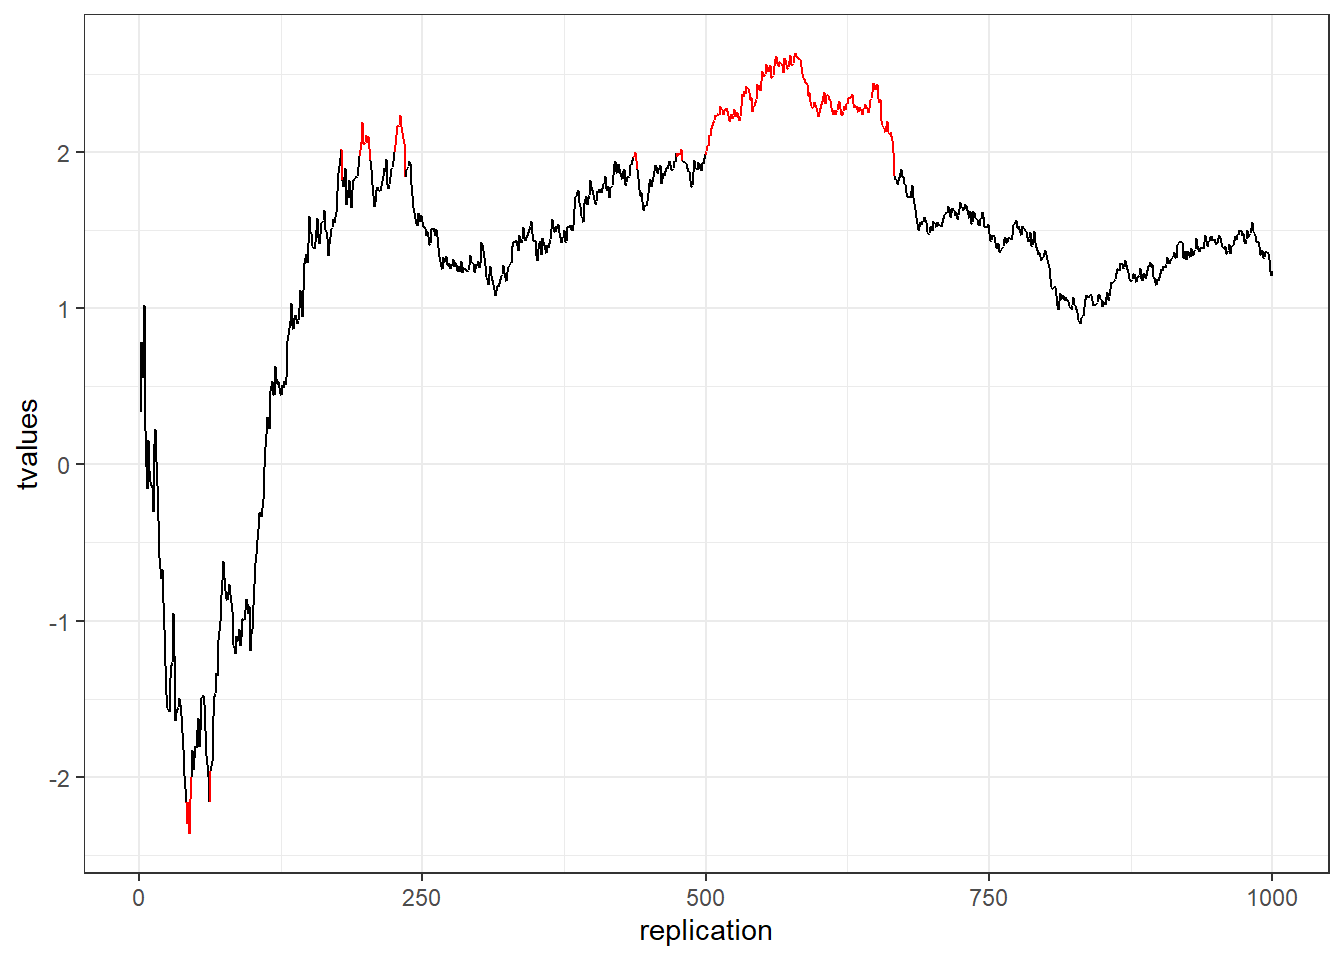 p-hacking (red indicates false positives)